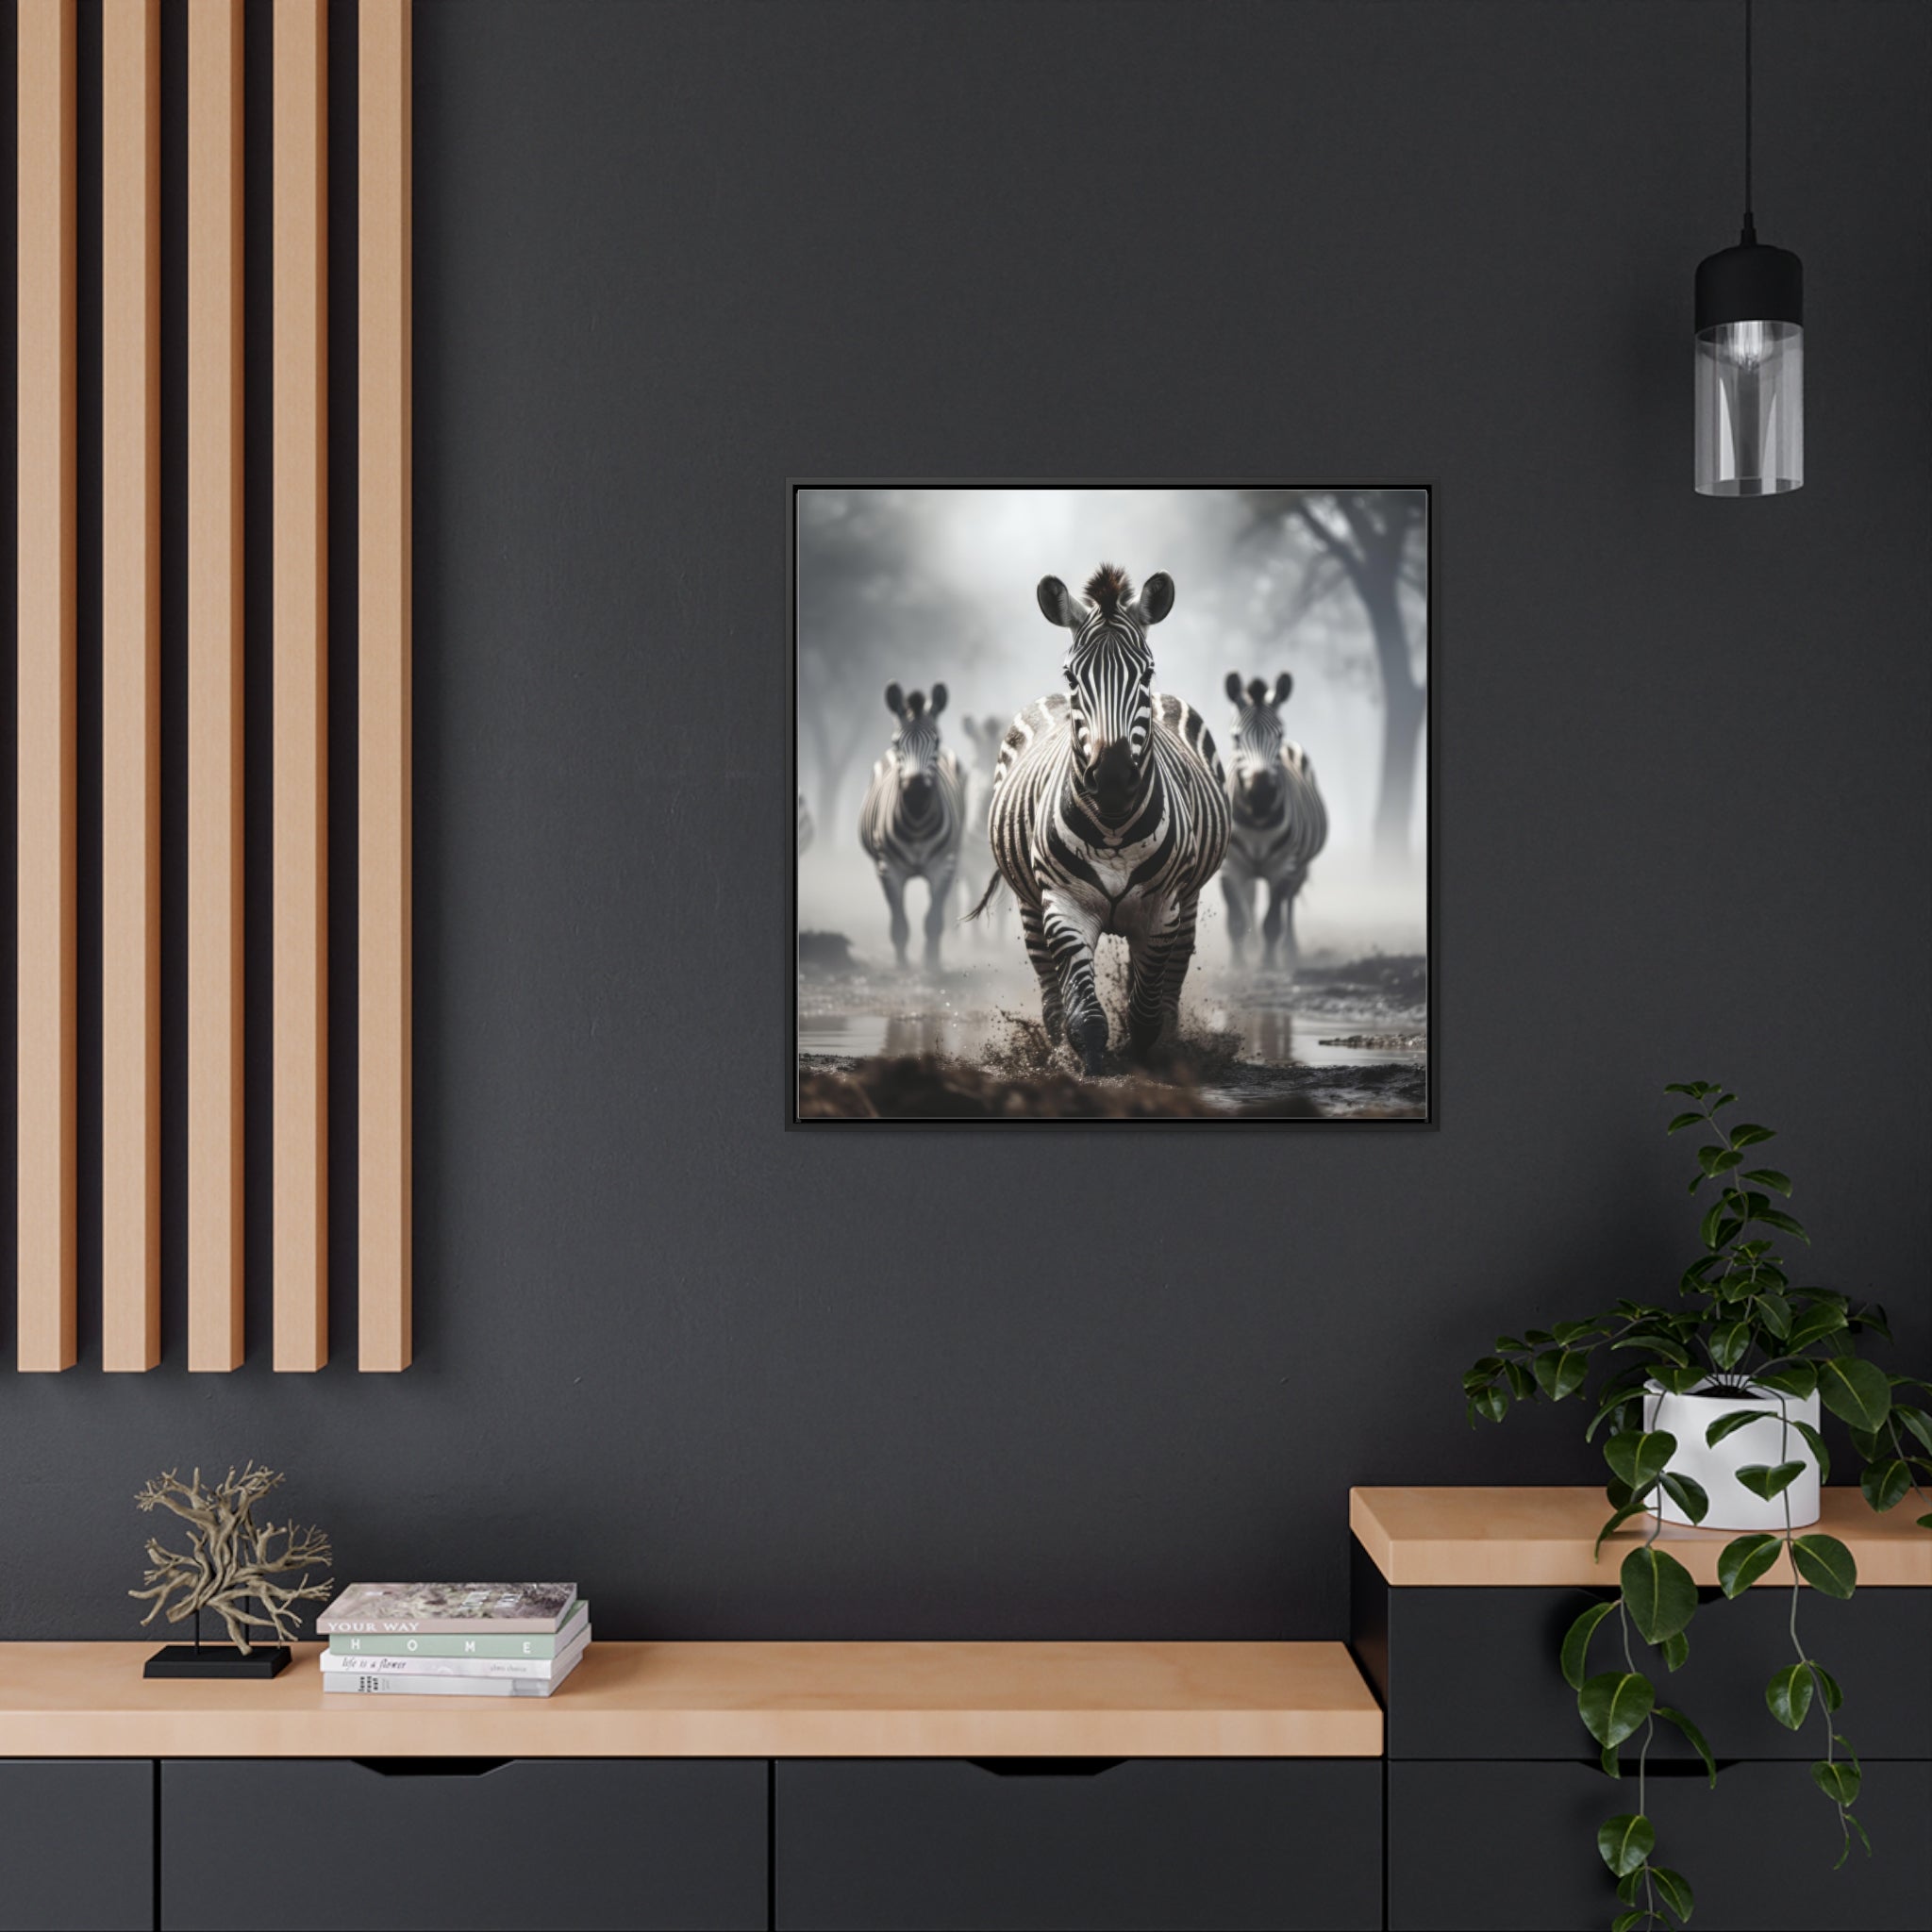 Zebras  | Gallery Canvas Wraps, Square Frame